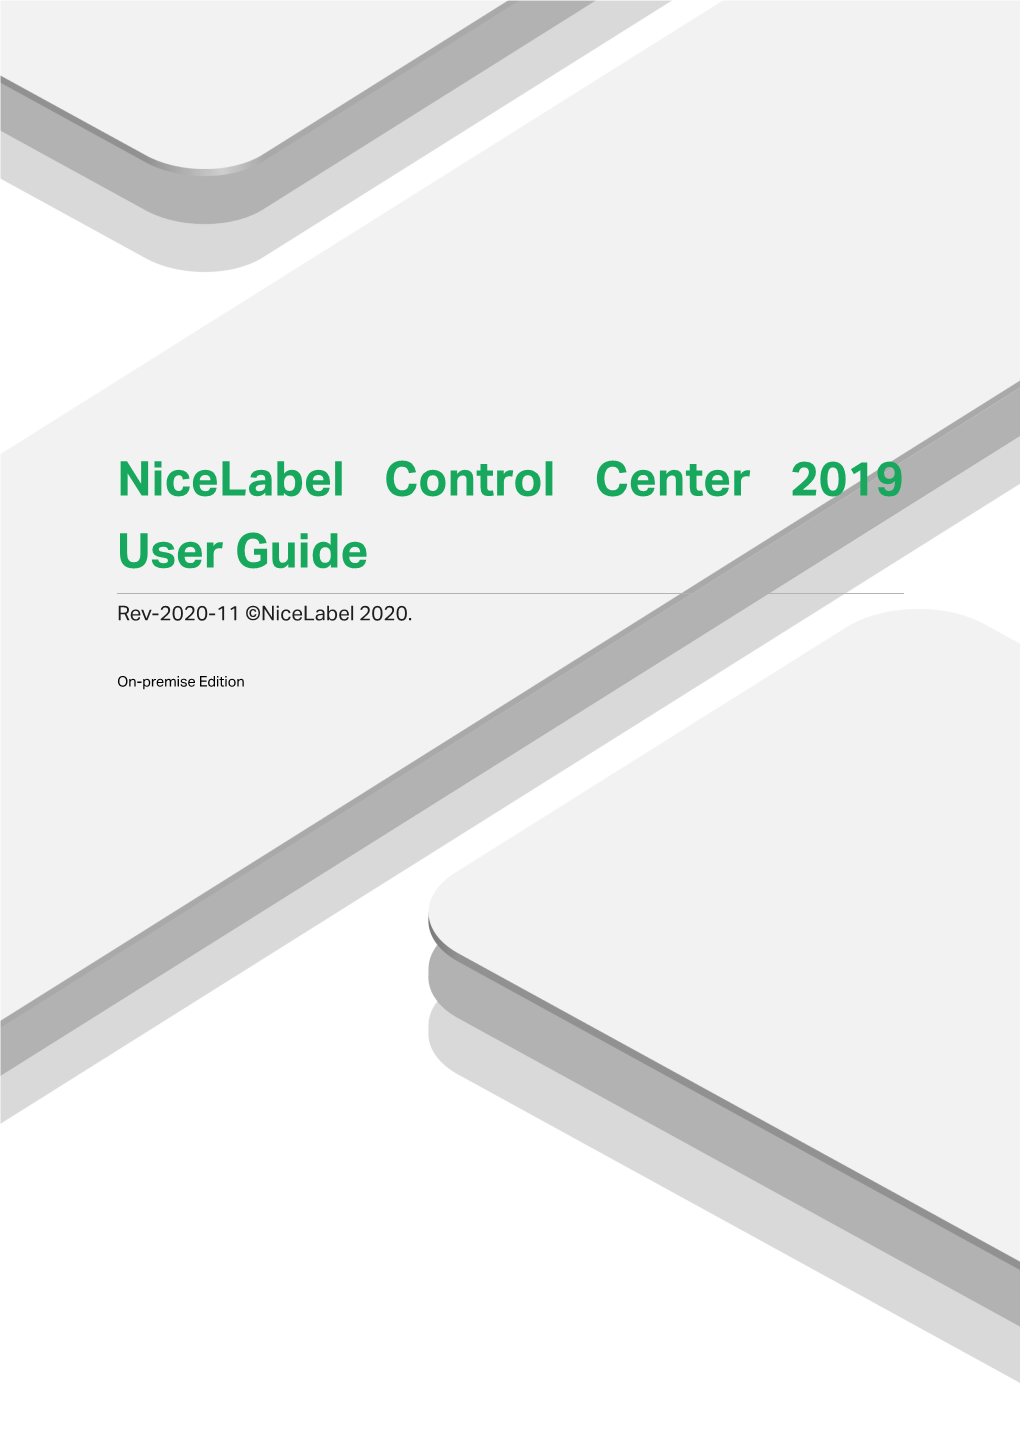 Nicelabel Control Center 2019 User Guide Rev-2020-11 ©Nicelabel 2020